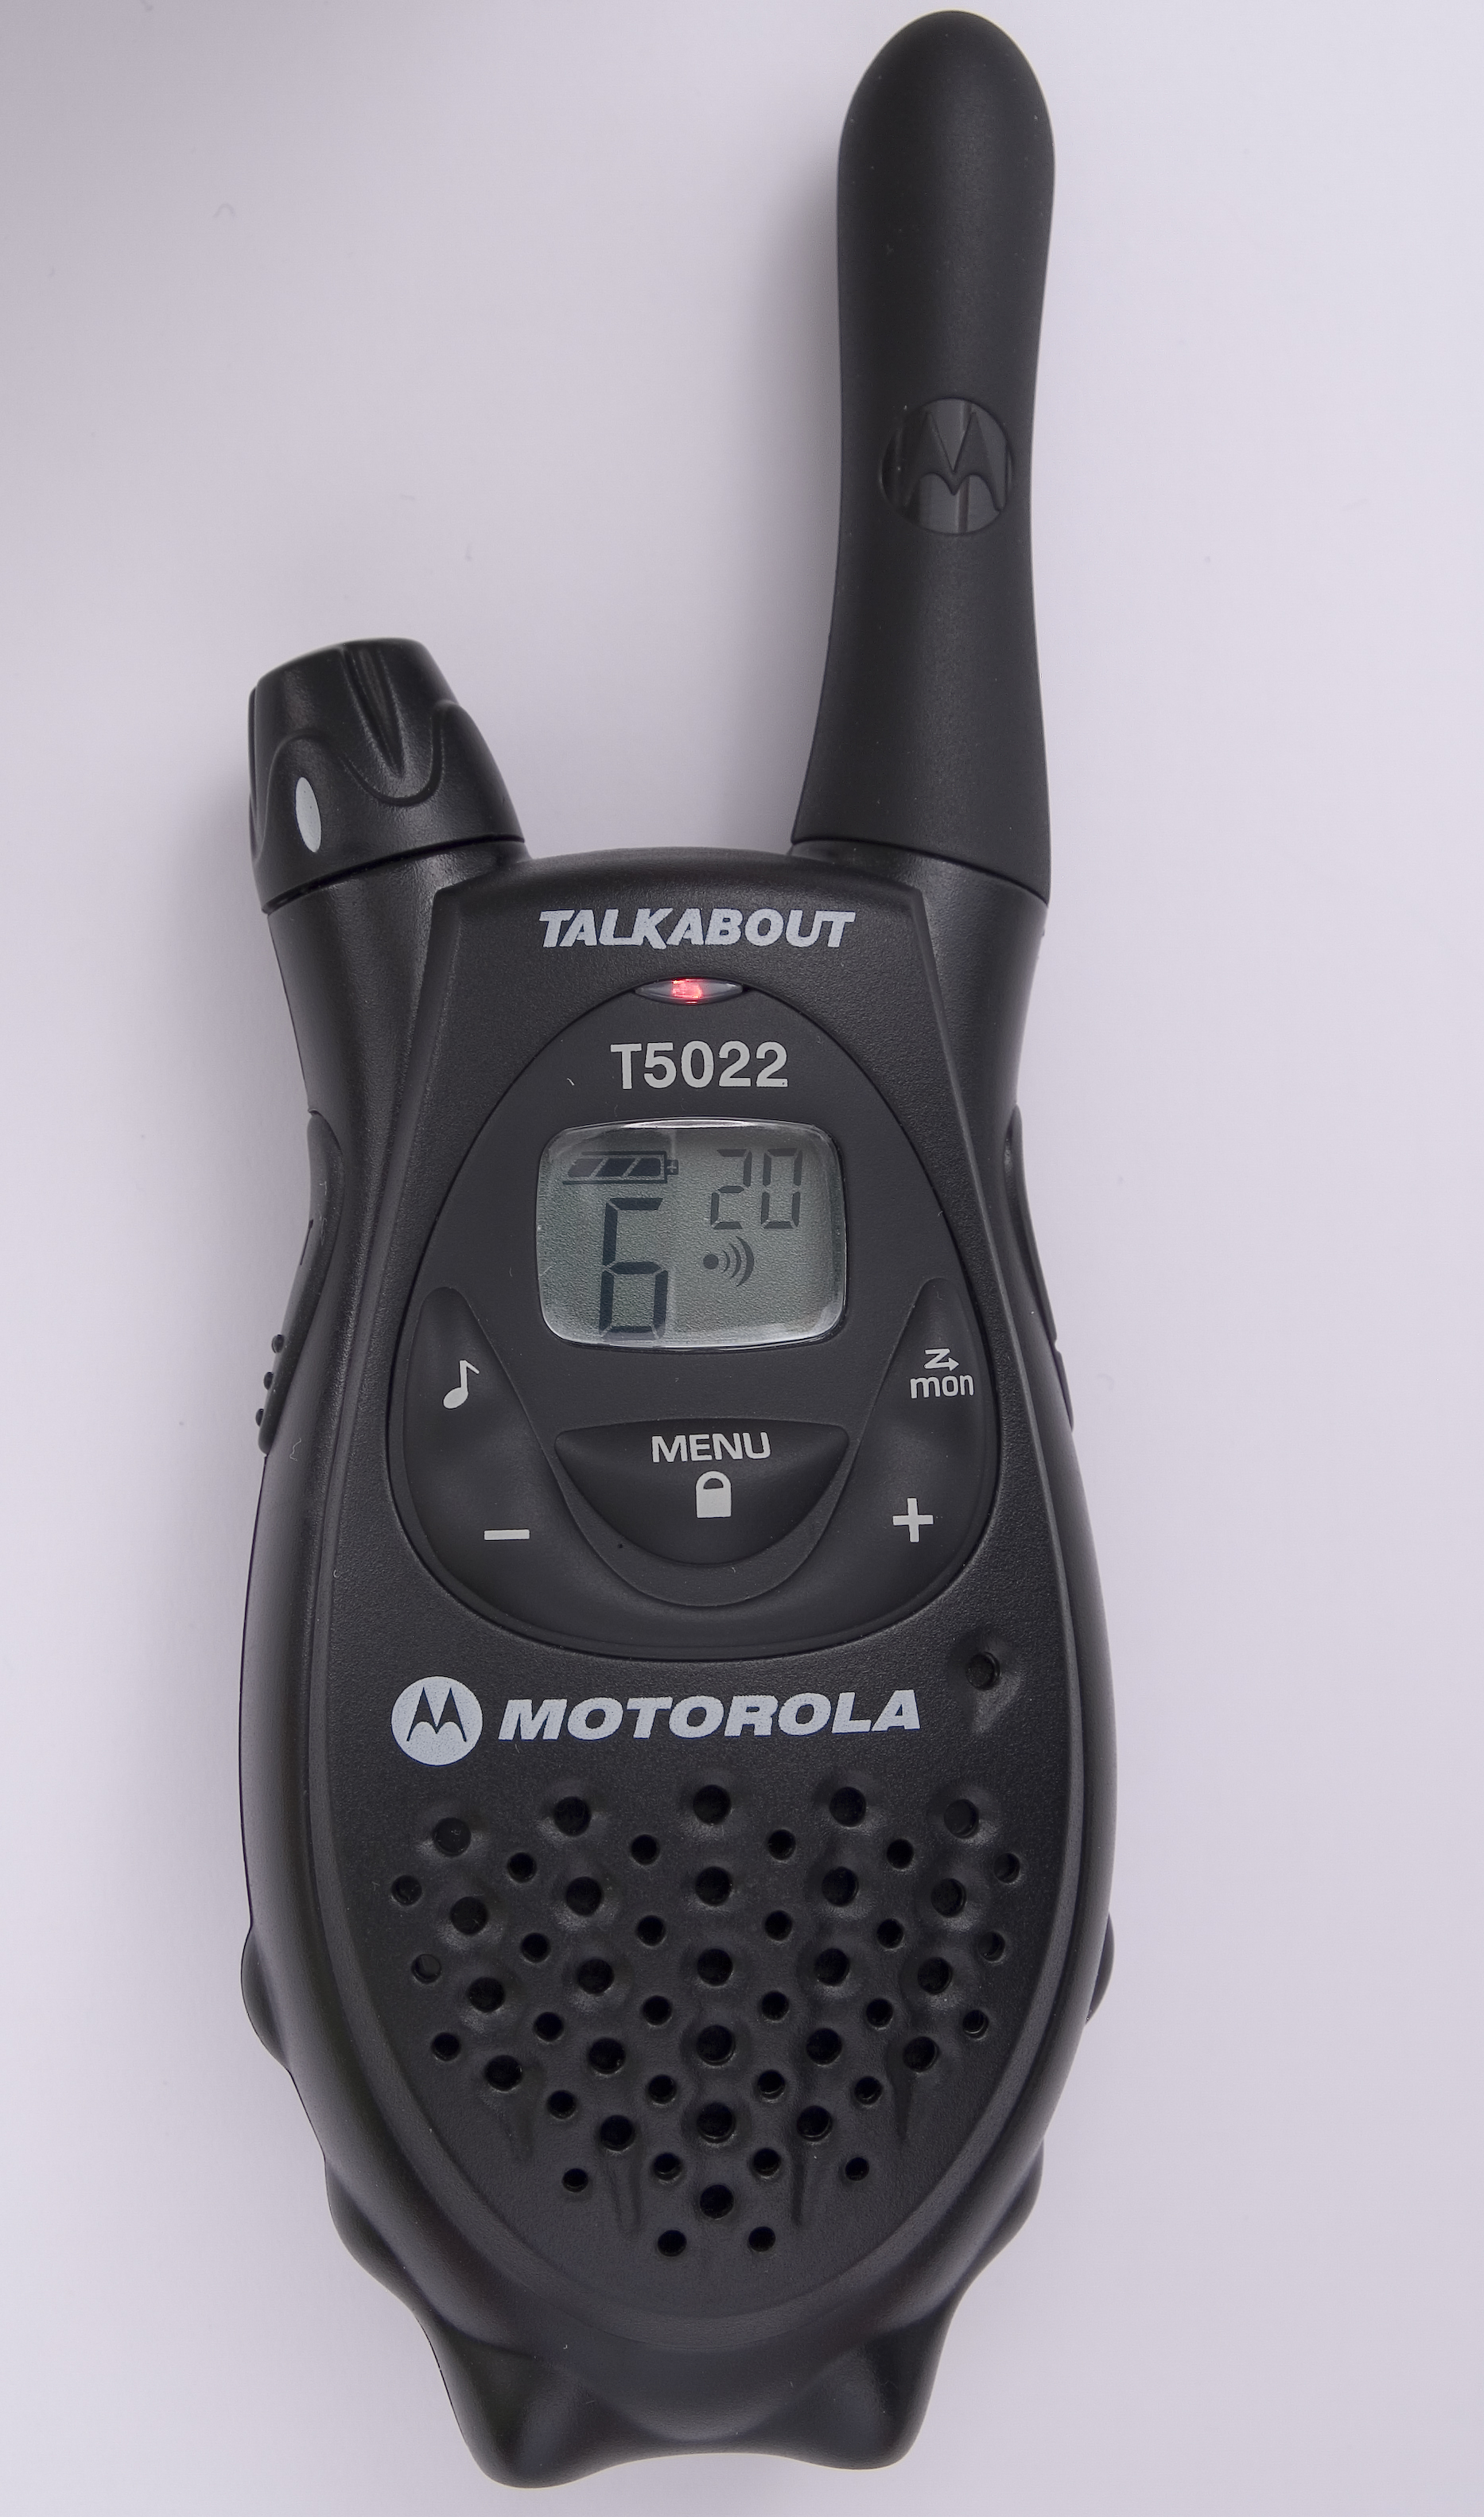 PMR 446 Portable Mini Communication Radio Talkie Two Way Radio Transceiver  